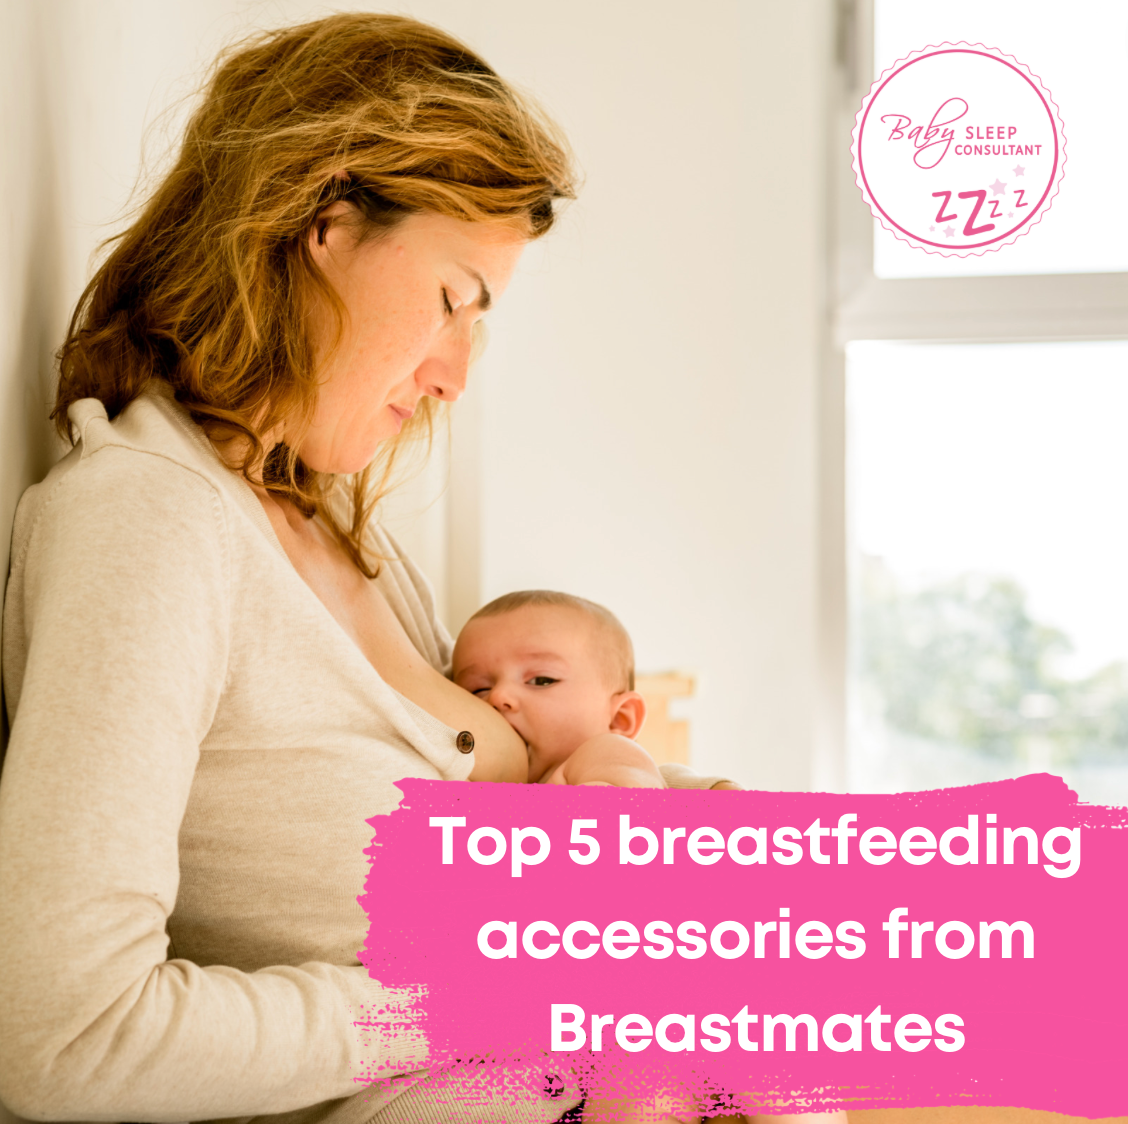 Breastfeeding Accessories